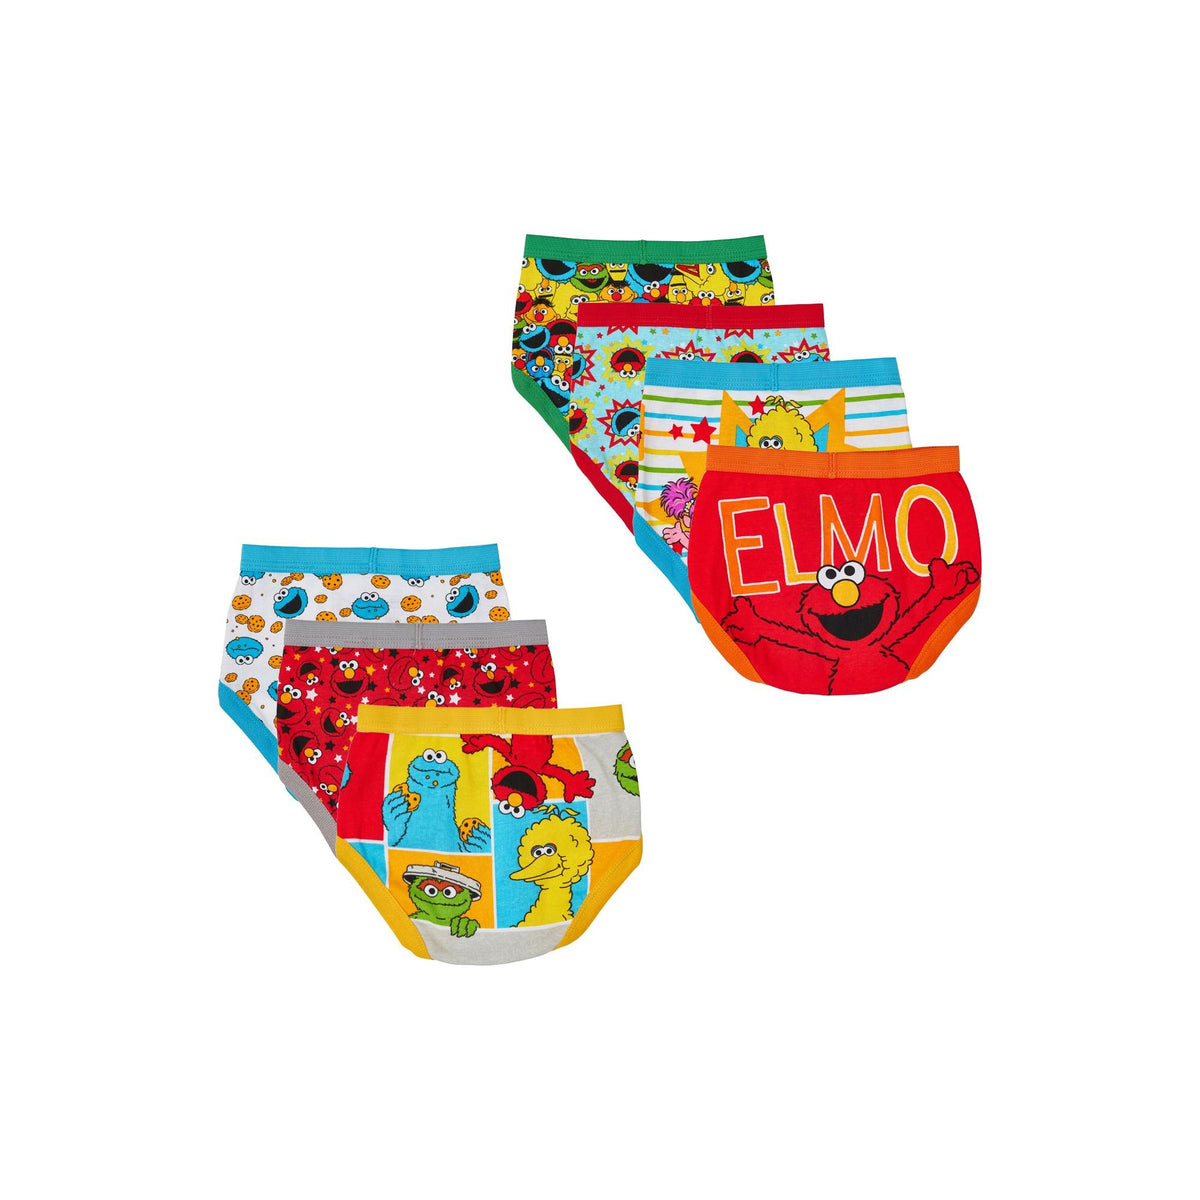  Sesame Street Elmo 3 Toddler Boys' Brief Pack (2T/3T